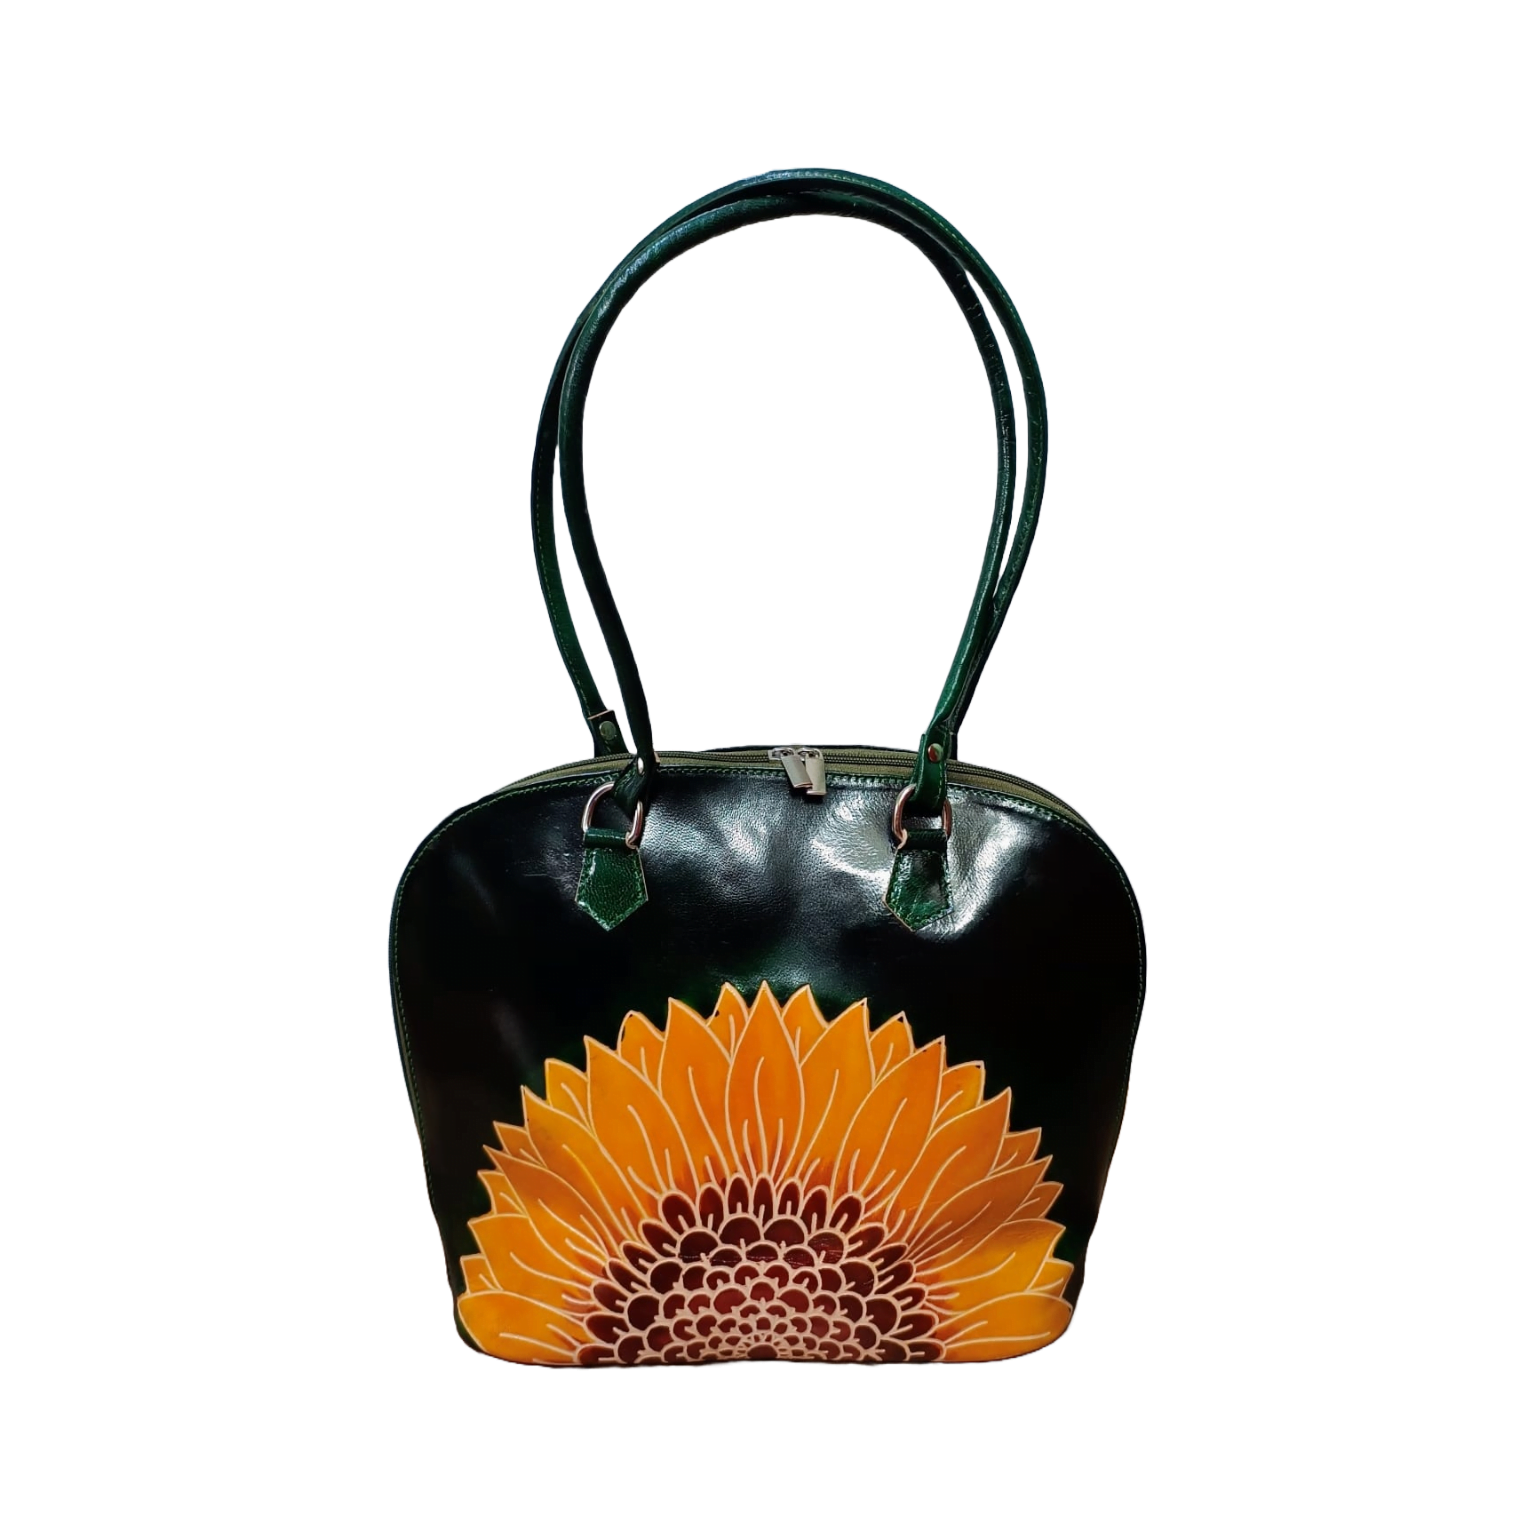 Sunflower Design Leather Handbag - 0